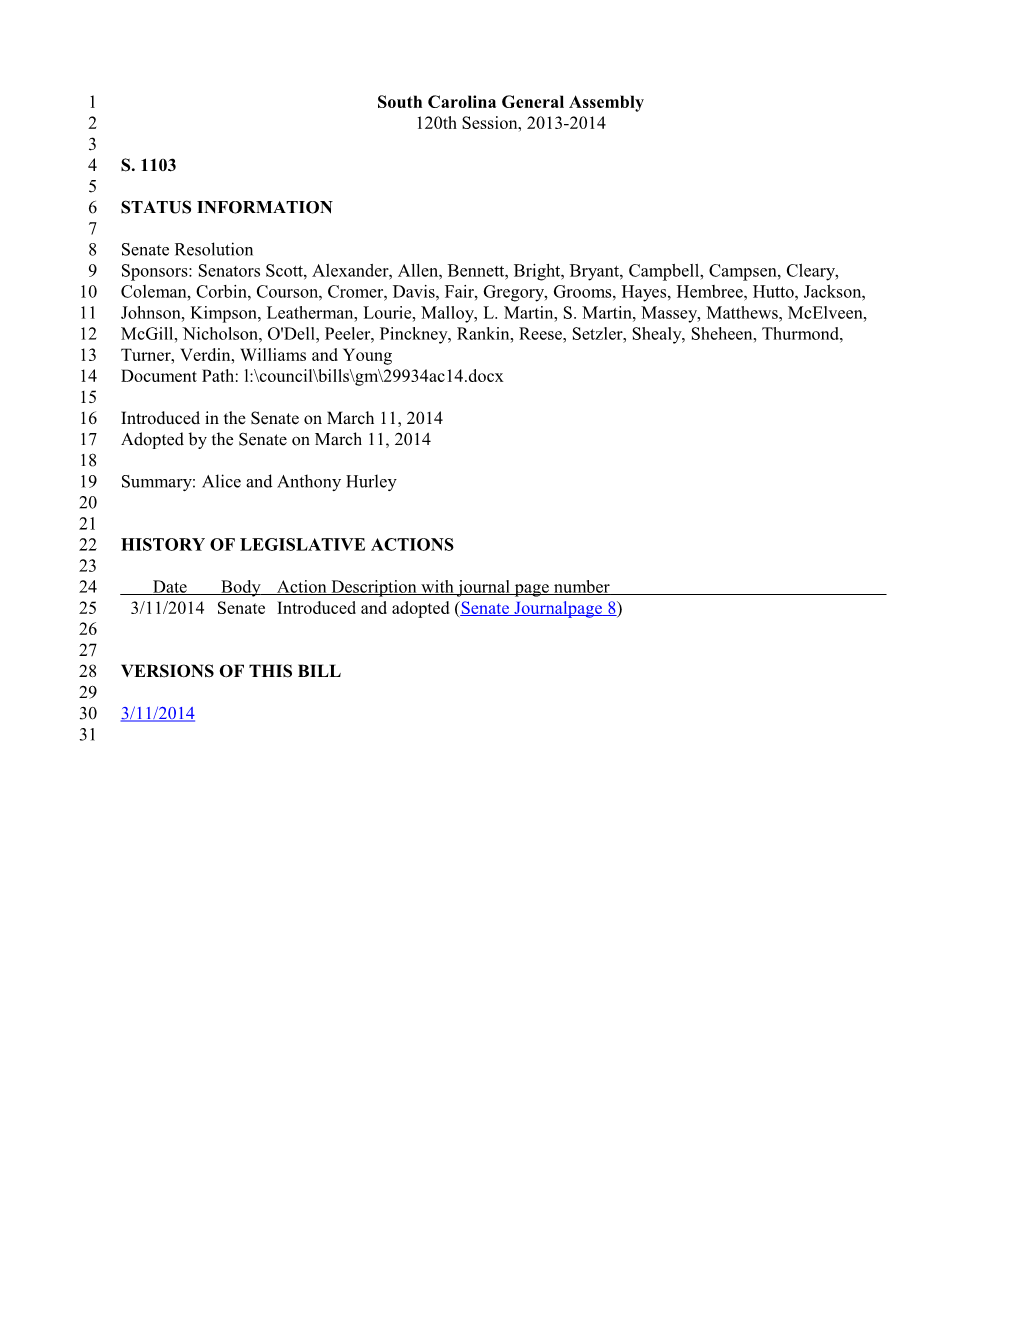 2013-2014 Bill 1103: Alice and Anthony Hurley - South Carolina Legislature Online